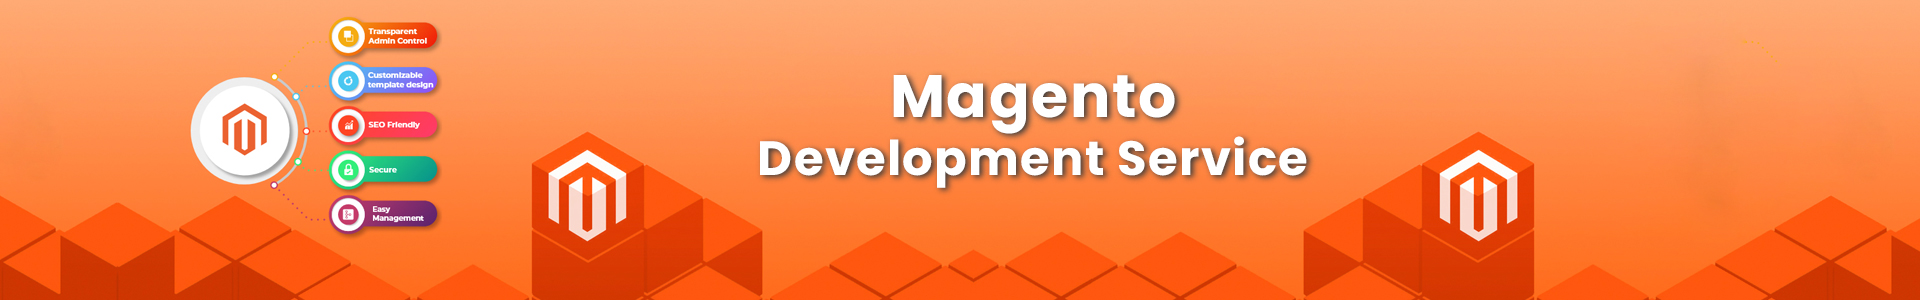 Magento Development Service